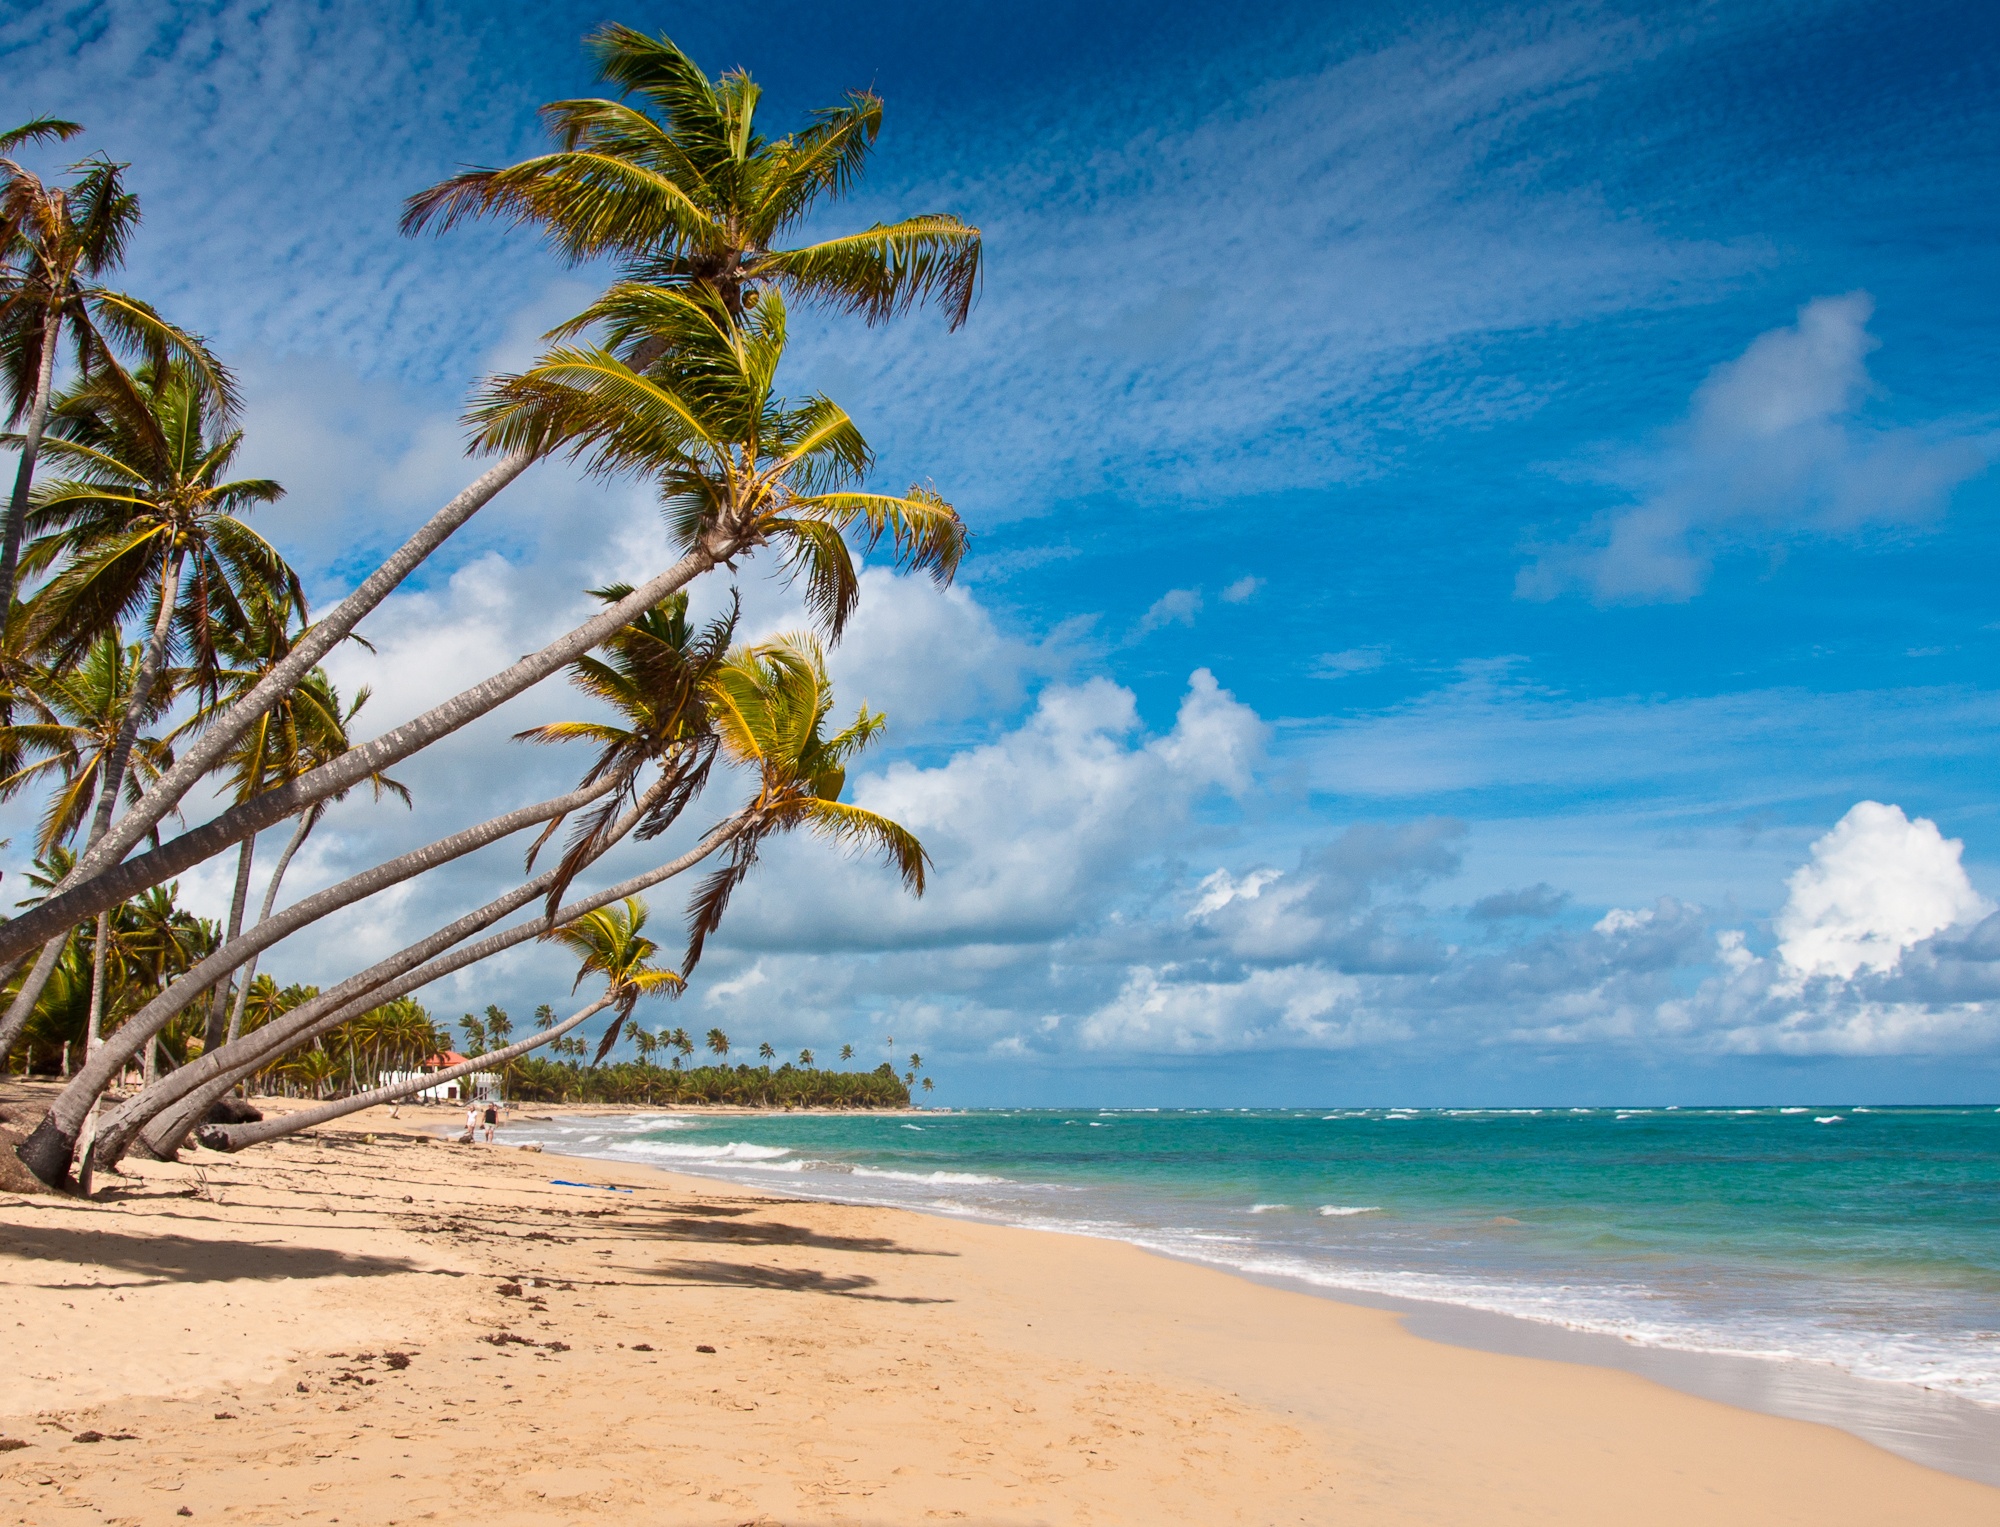 The Best Beaches in Punta Cana, Dominican Republic